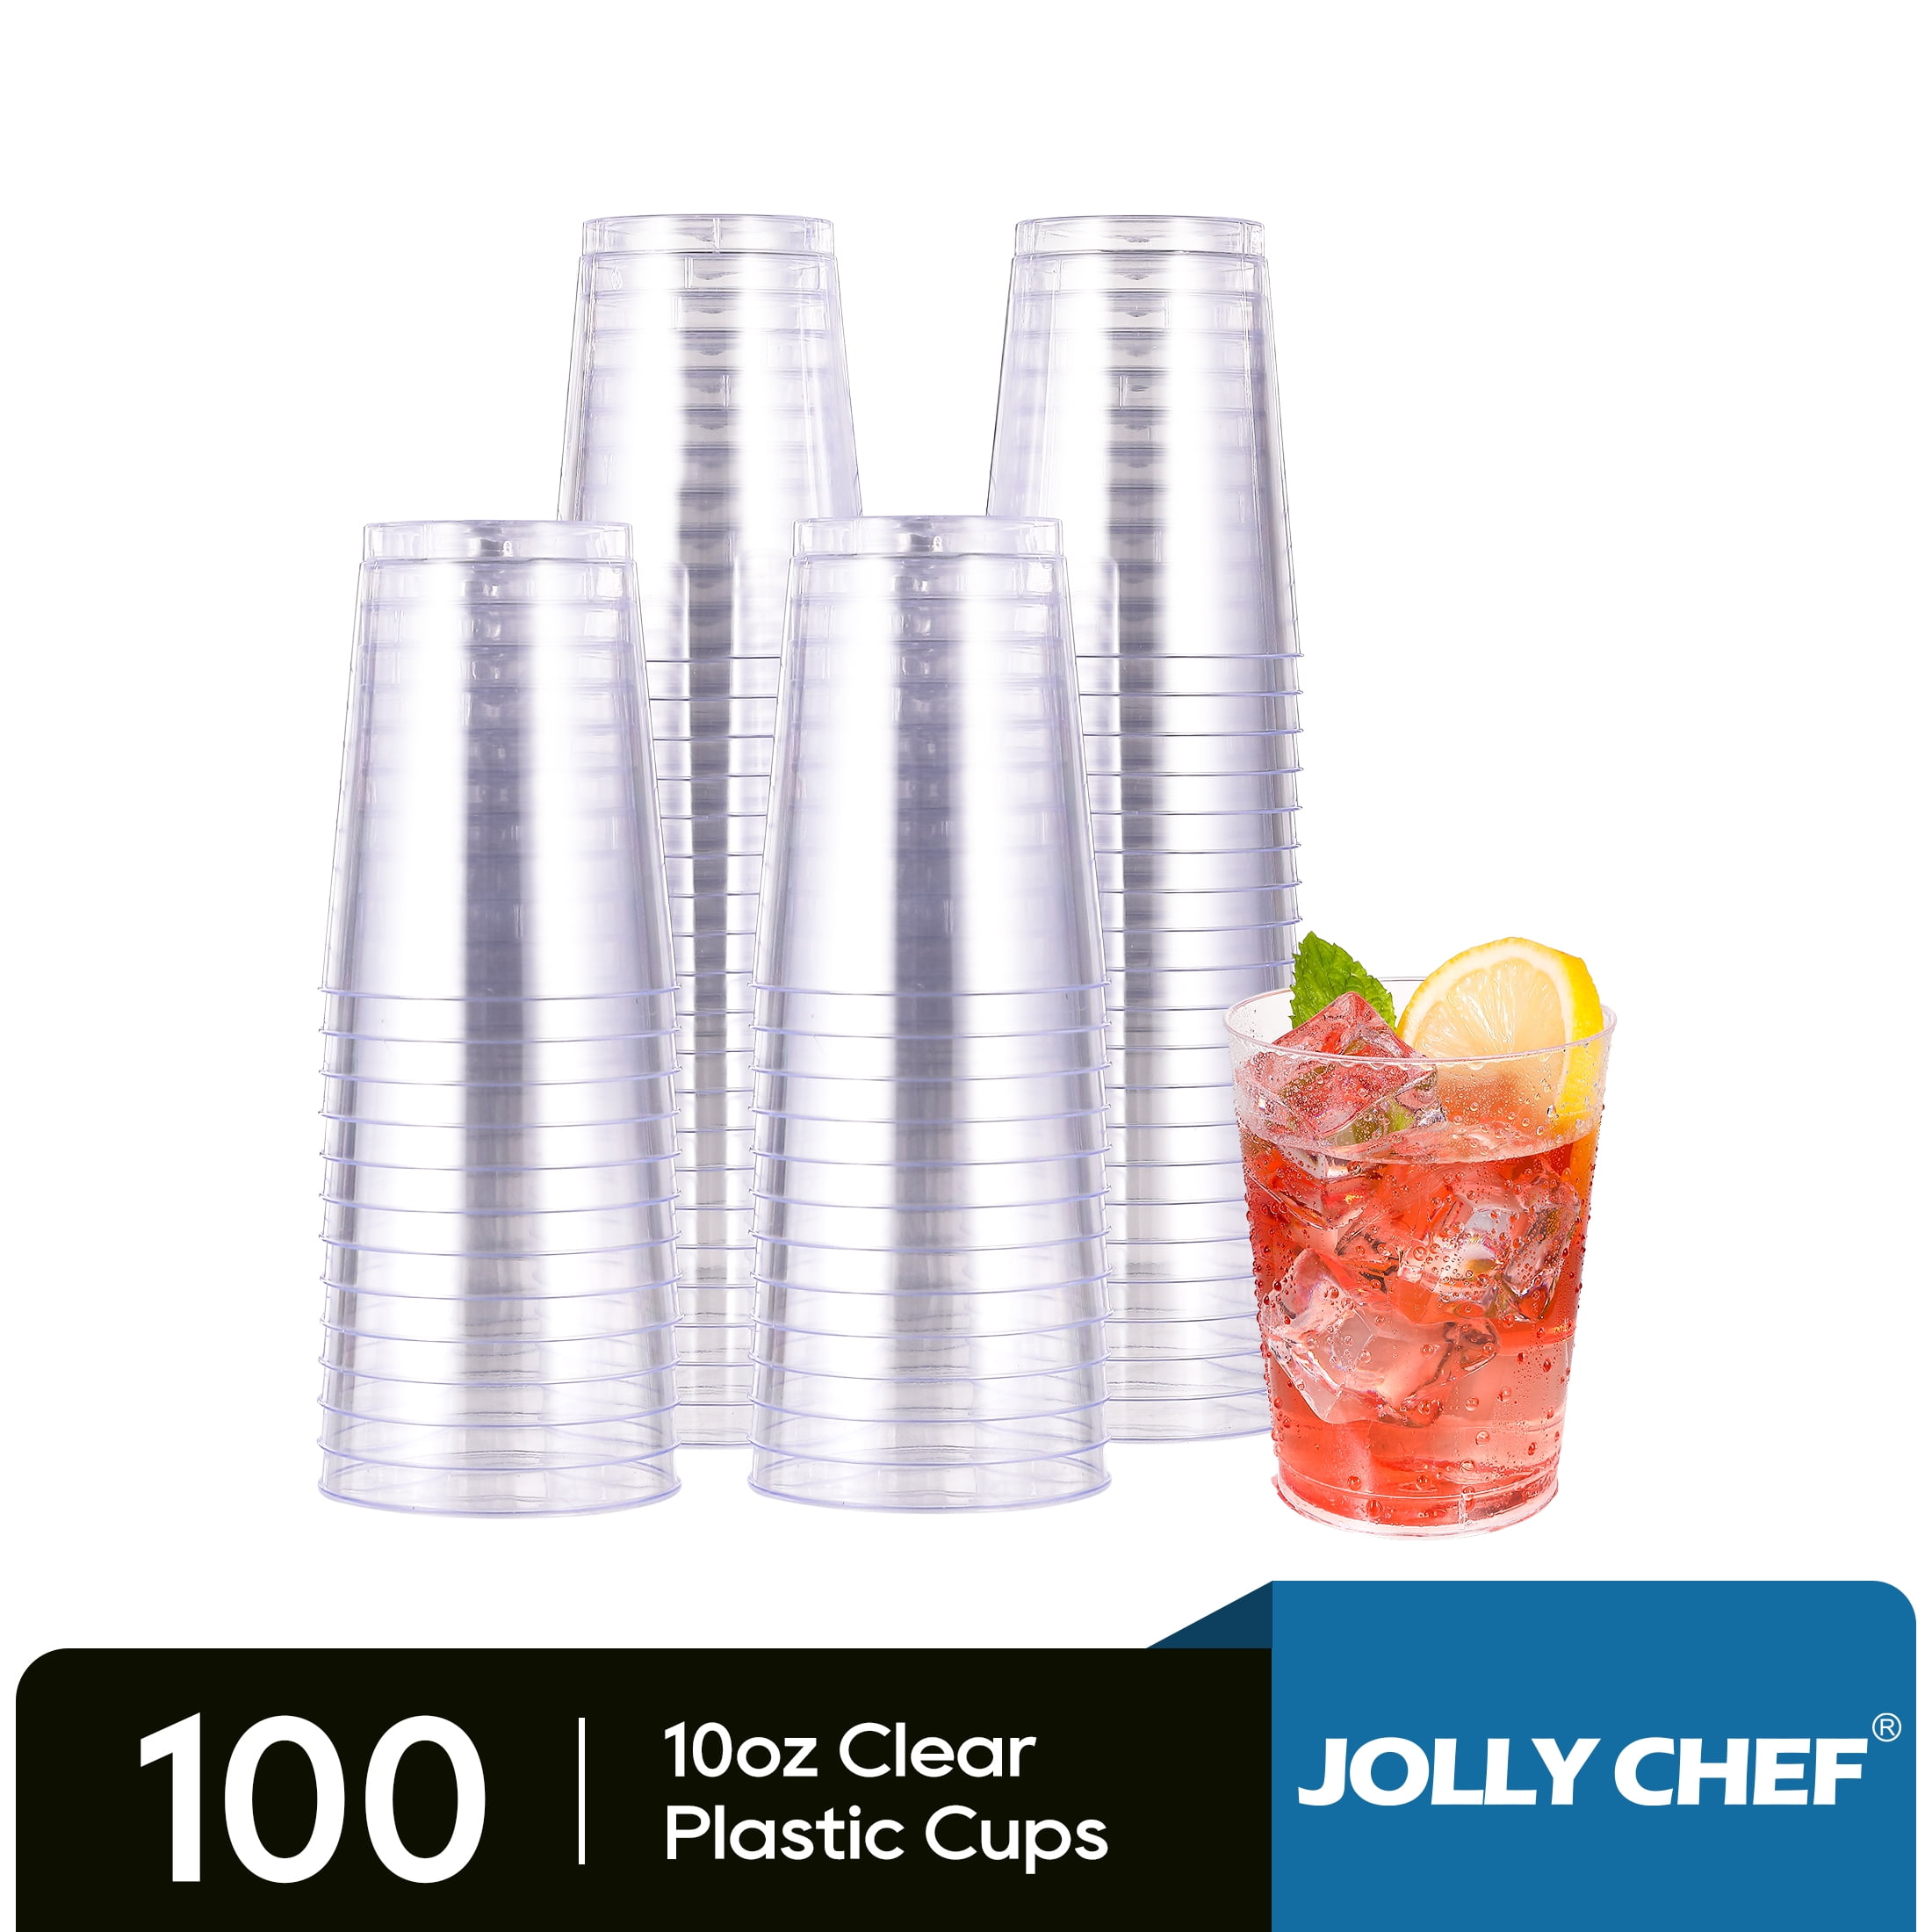 YBM Home Reusable Plastic Cups 10 oz, Unbreakable Drinkware Dishwasher  Safe, Blue 